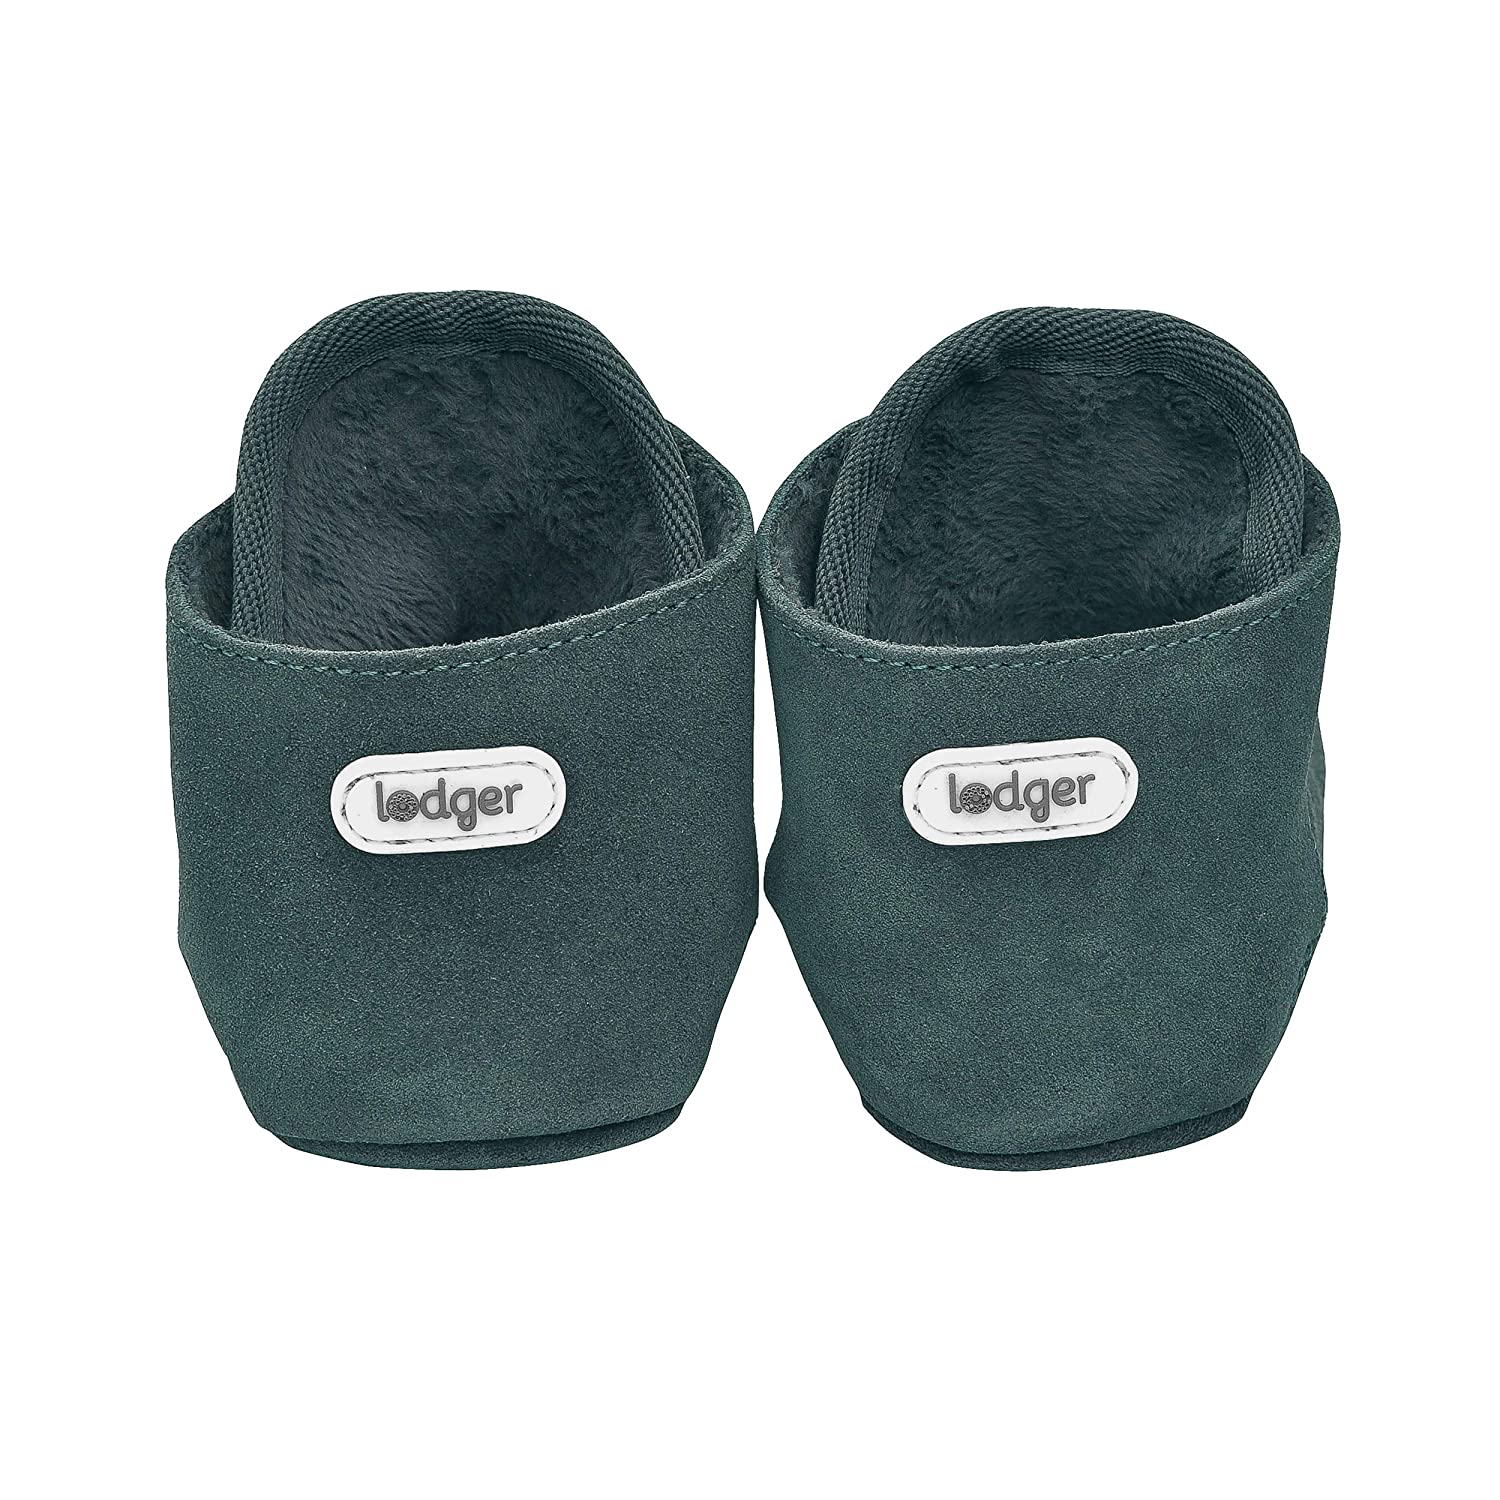 Lodger WKLE1001 Lodger Baby Shoes Walker Dark Green 6-12 Months Green